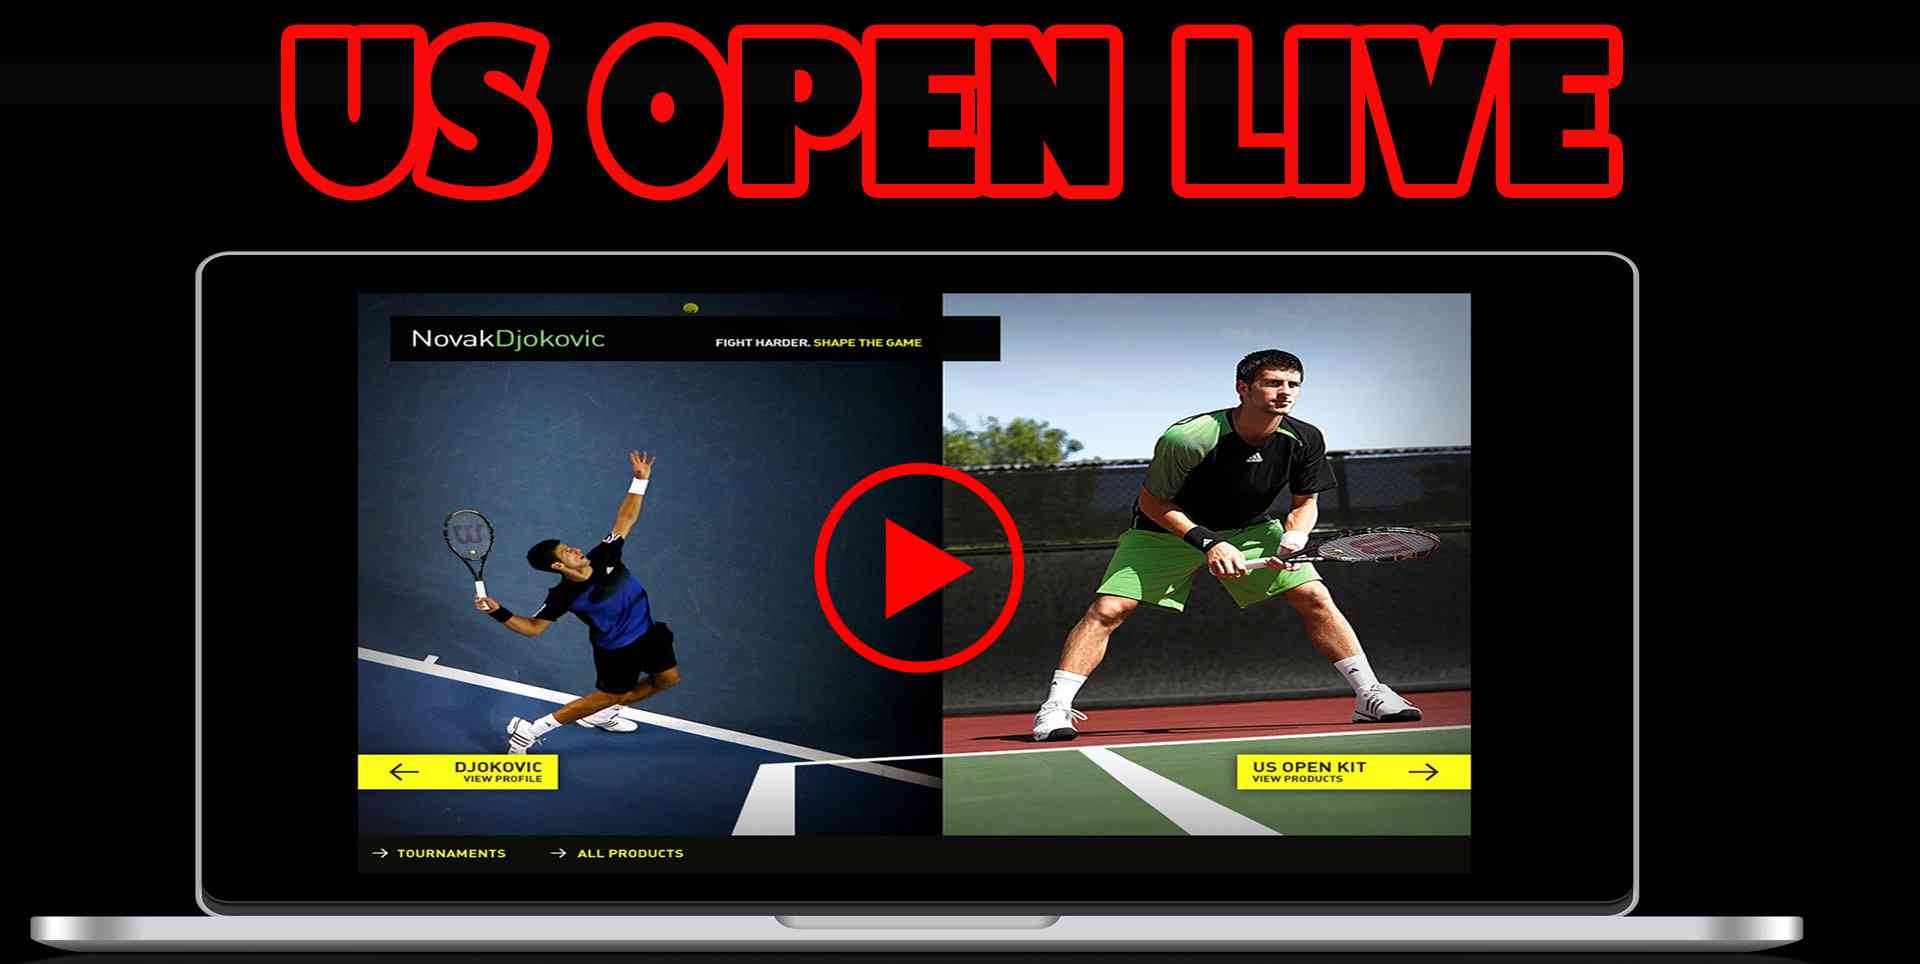 Tennis live stream